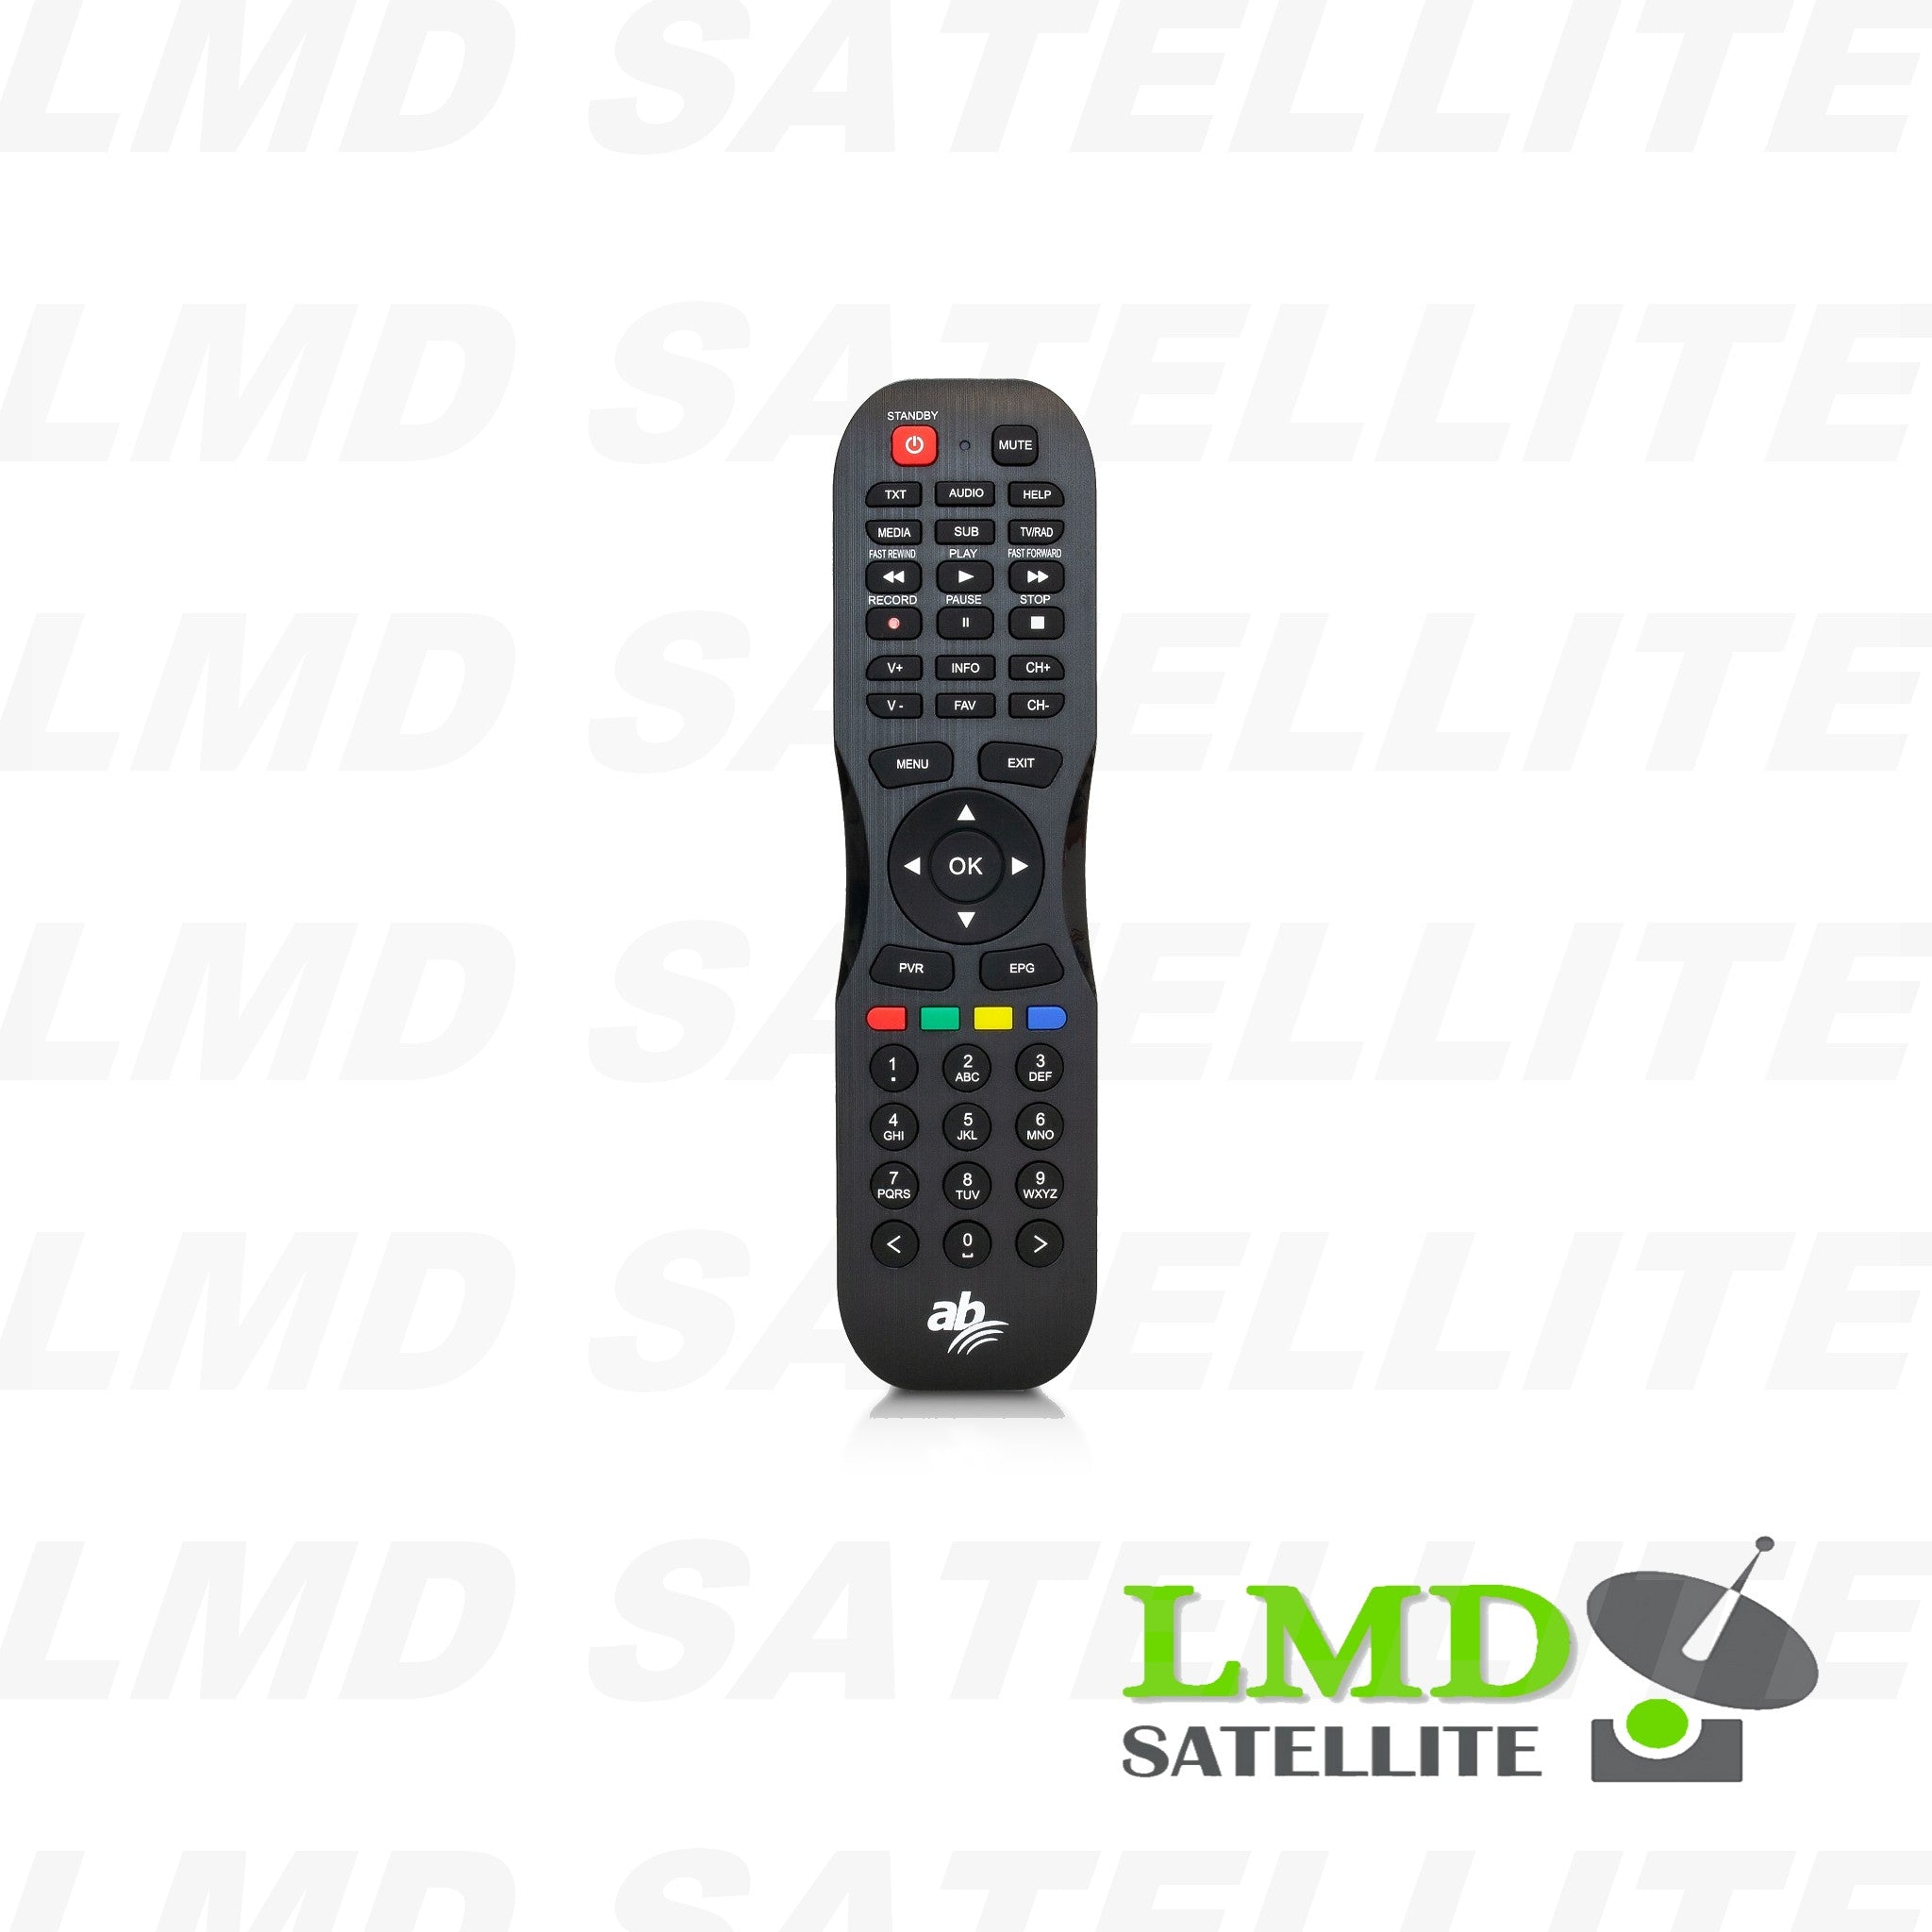 USB DVB-T2 HD Digital TV Receiver USB TV Tuner Digital Watch DVB-T2 DVB-T  Satellite Receiver TV Stick For Android Phone/Pad price in UAE,  UAE